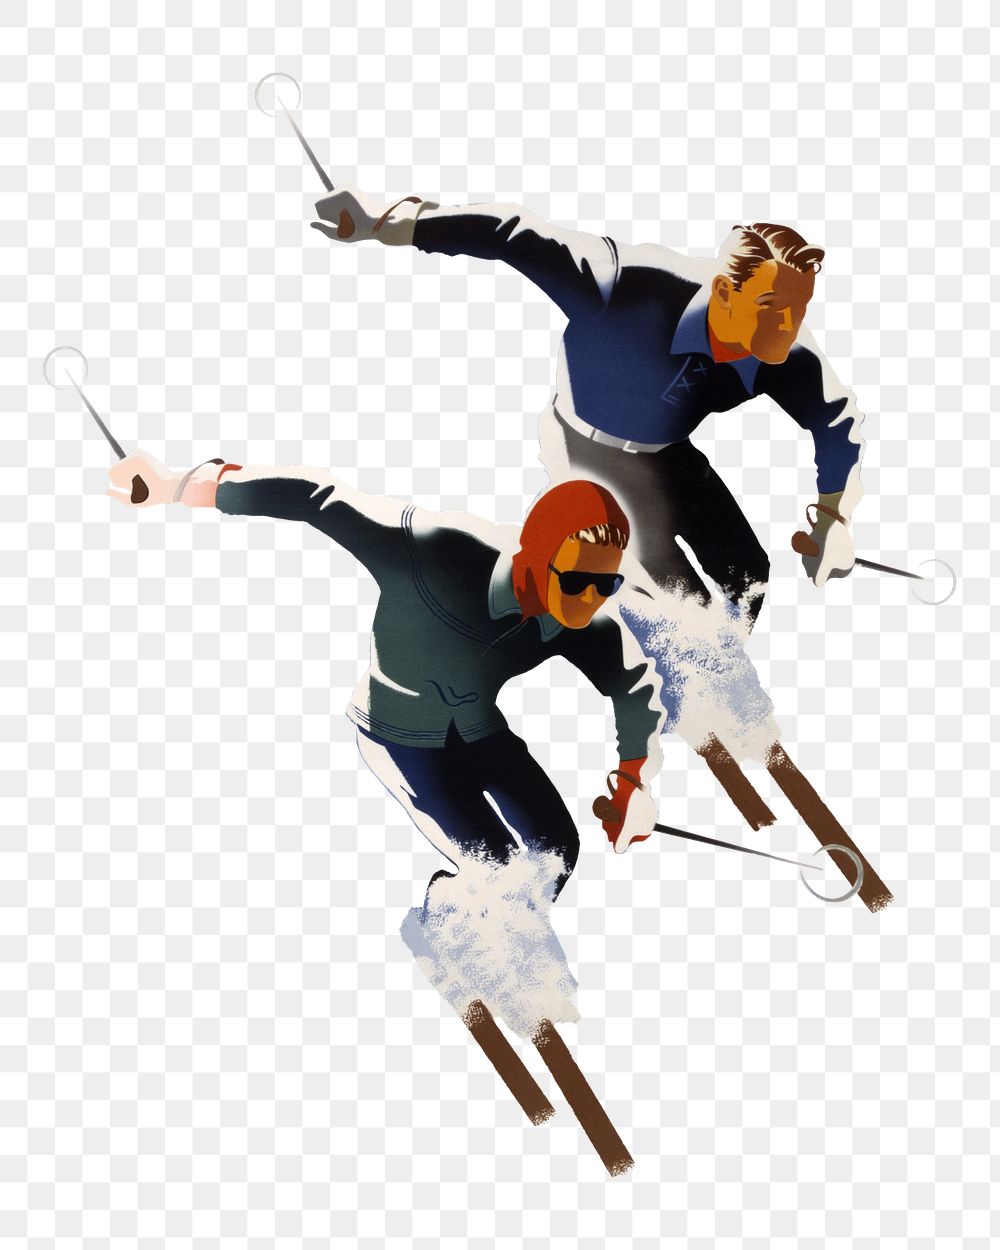 Vintage ski png, sport illustration by Joseph Binder on transparent background. Remixed by rawpixel.